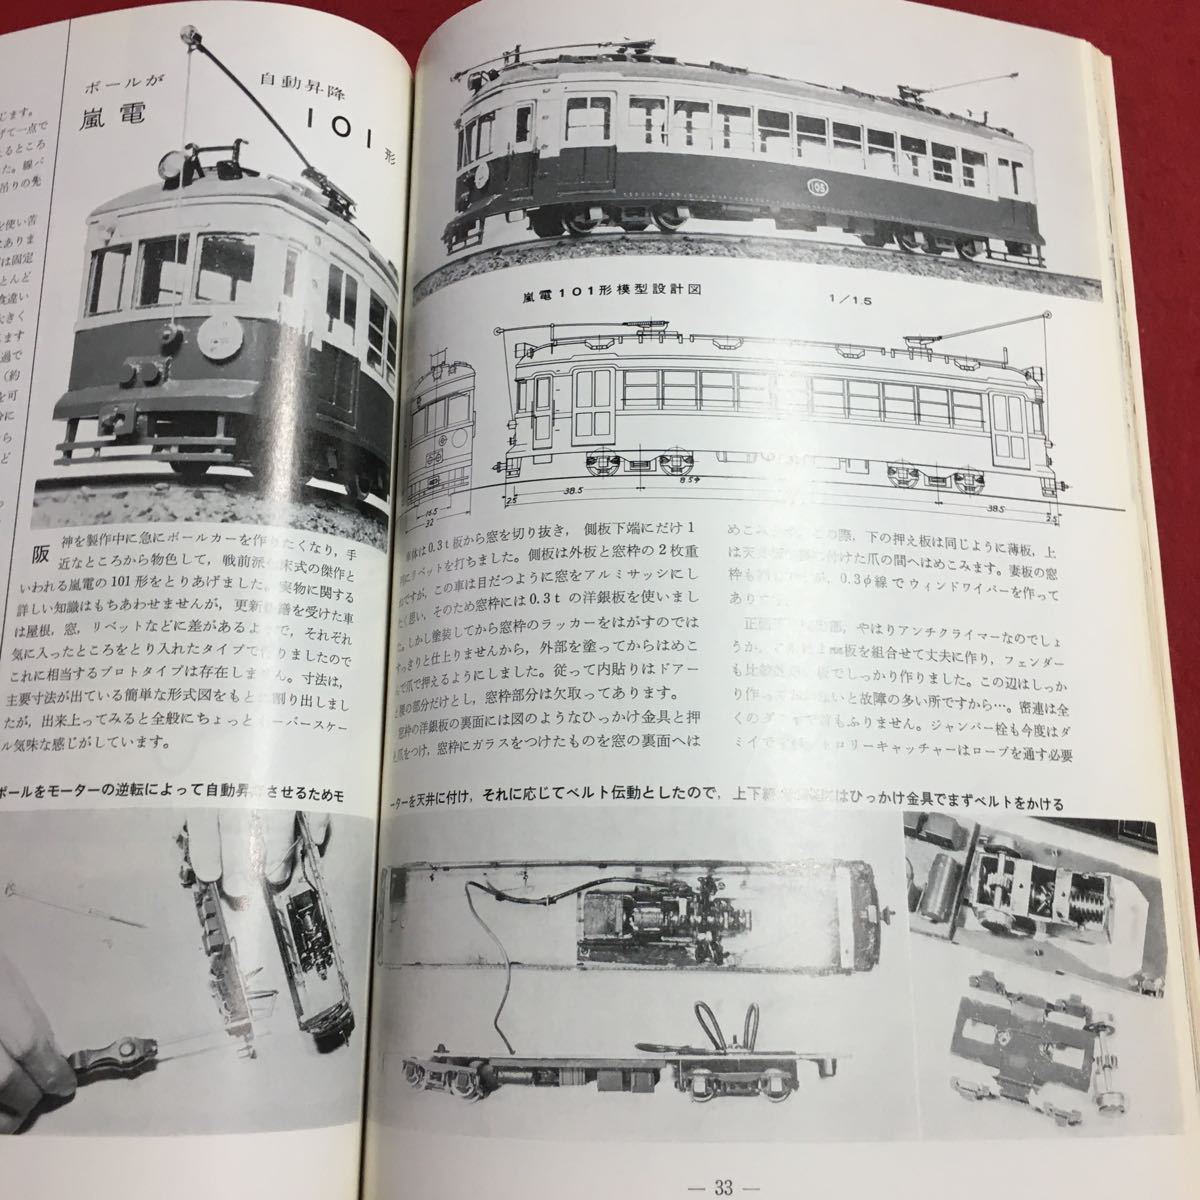 S7i-240 鉄道模型趣味 1973年5月号 No.299 昭和48年5月1日 発行 機芸出版社 雑誌 プラモデル 模型 鉄道 レイアウト ナハ11 ED54 ジオラマ_画像7